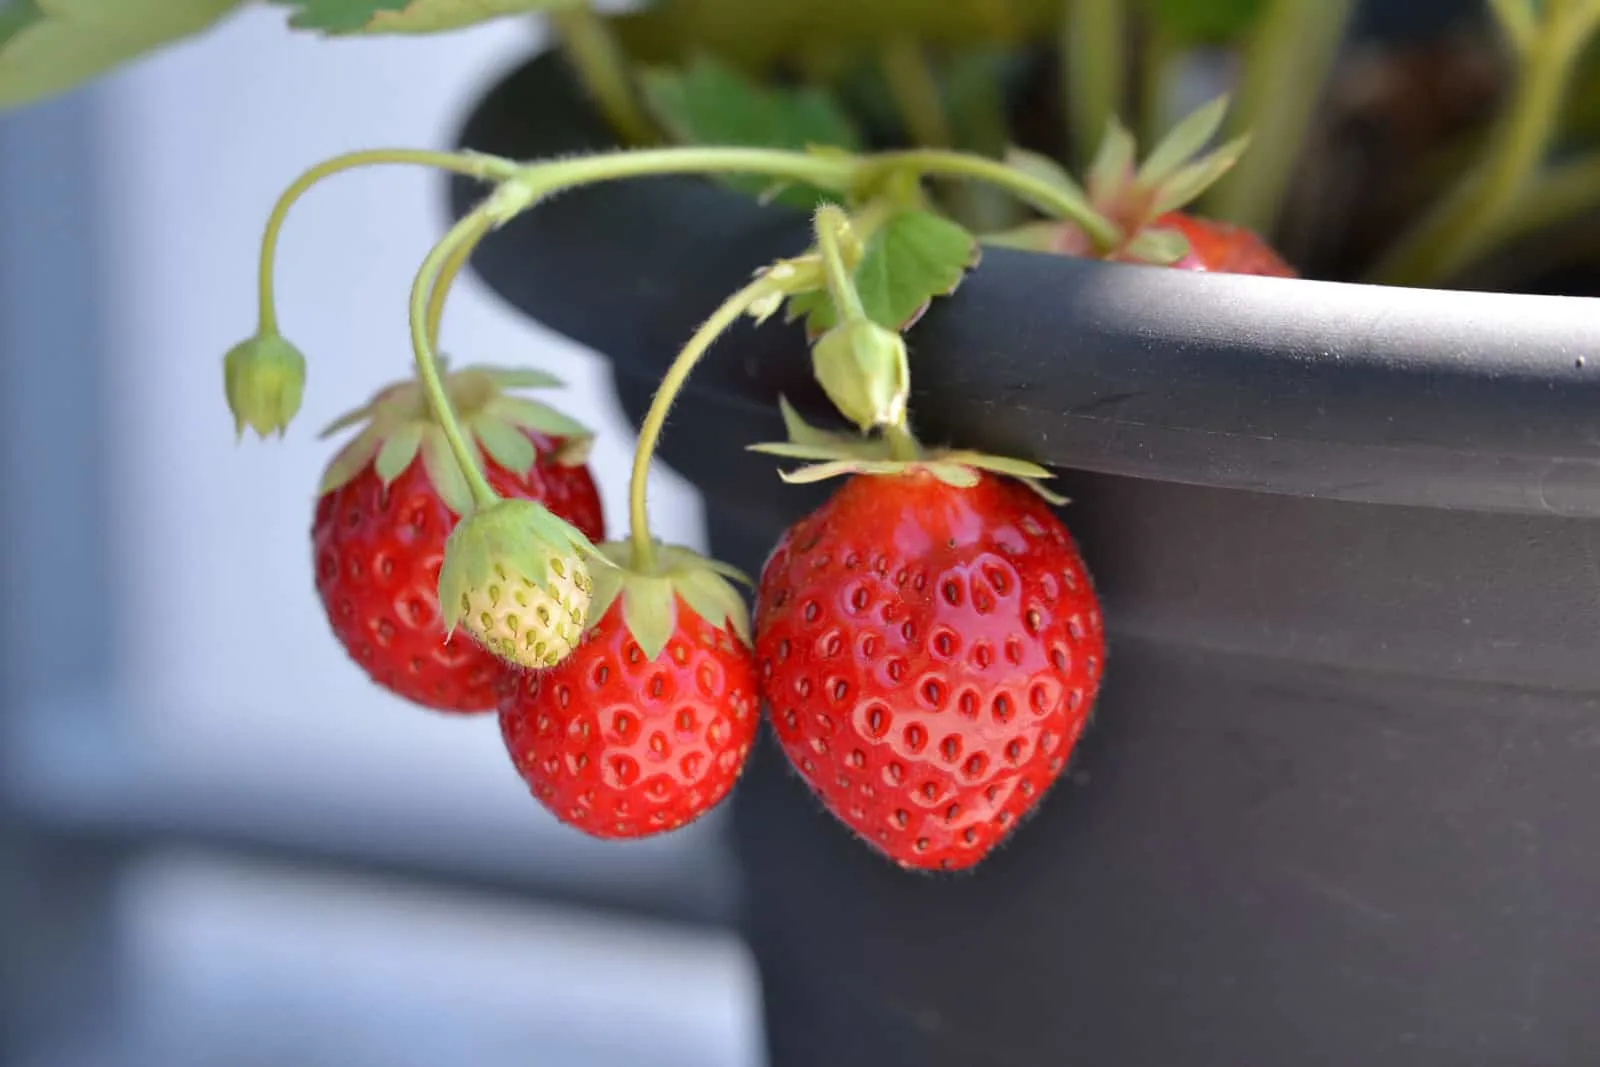 Strawberries plant in a plastic pot